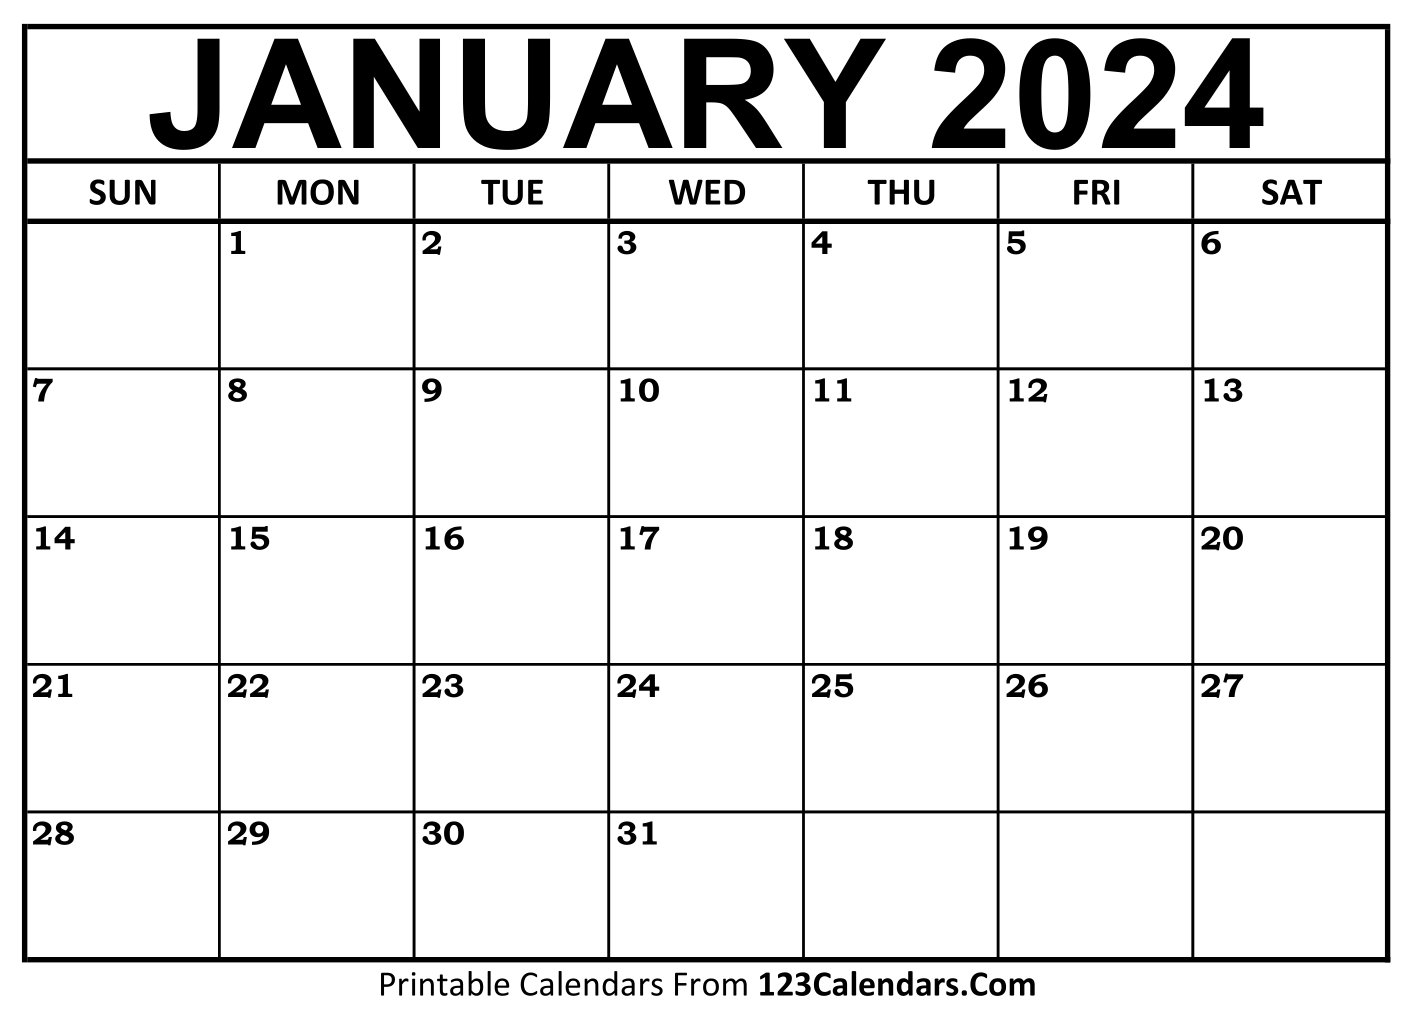 Printable January 2024 Calendar Templates - 123Calendars for January 2024 Calendar Blank Printable